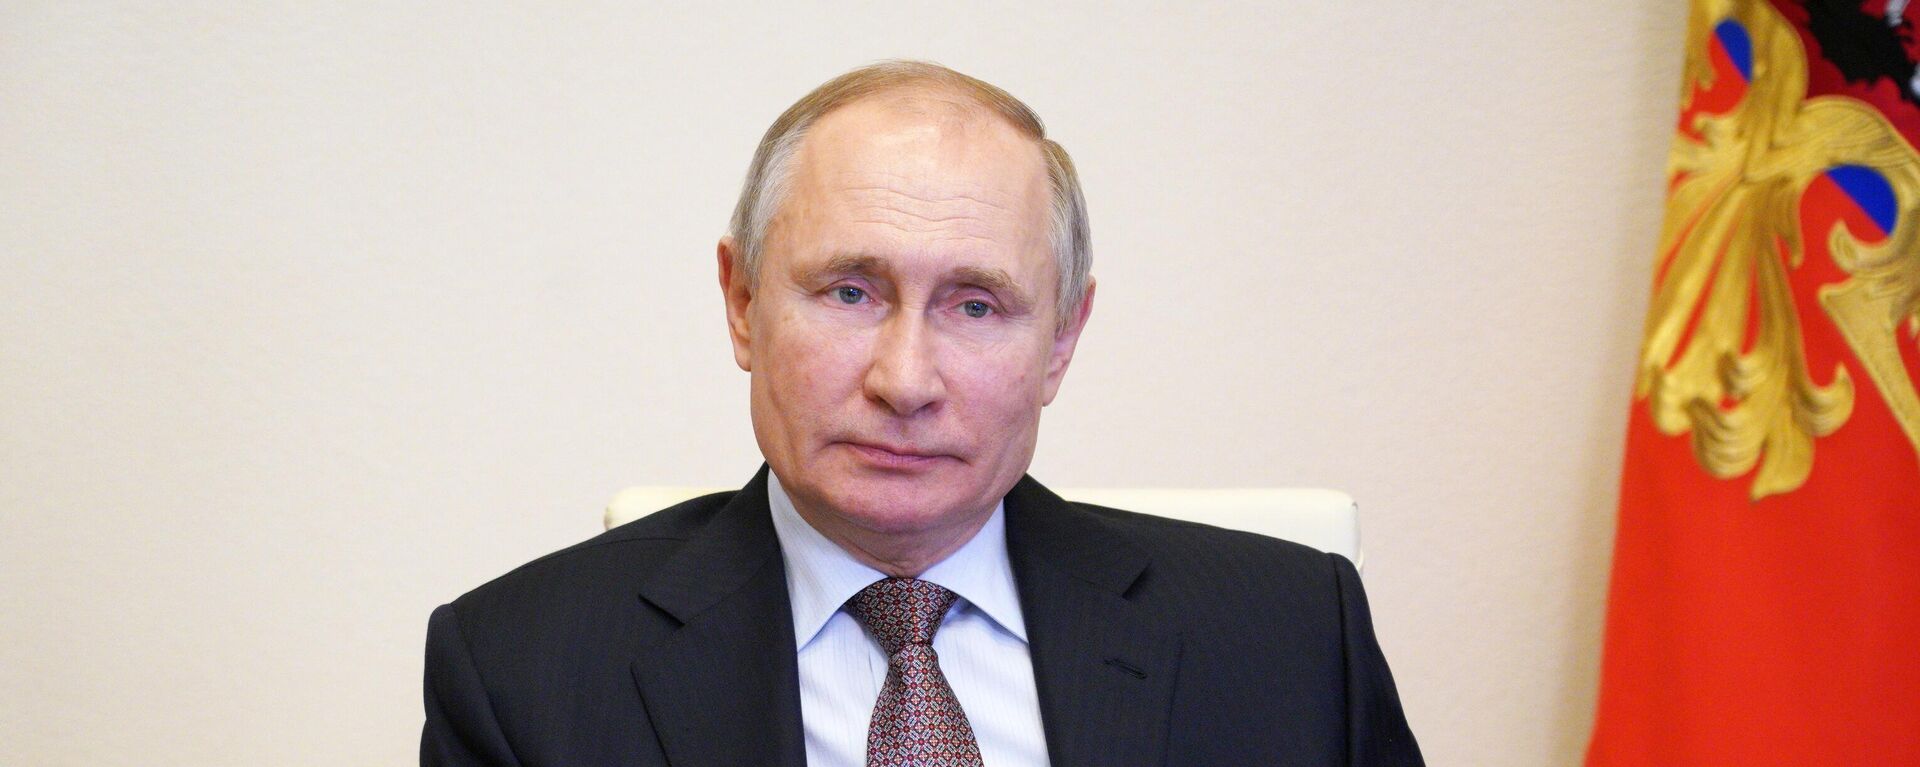 Vladímir Putin, presidente de Rusia - Sputnik Mundo, 1920, 21.07.2021